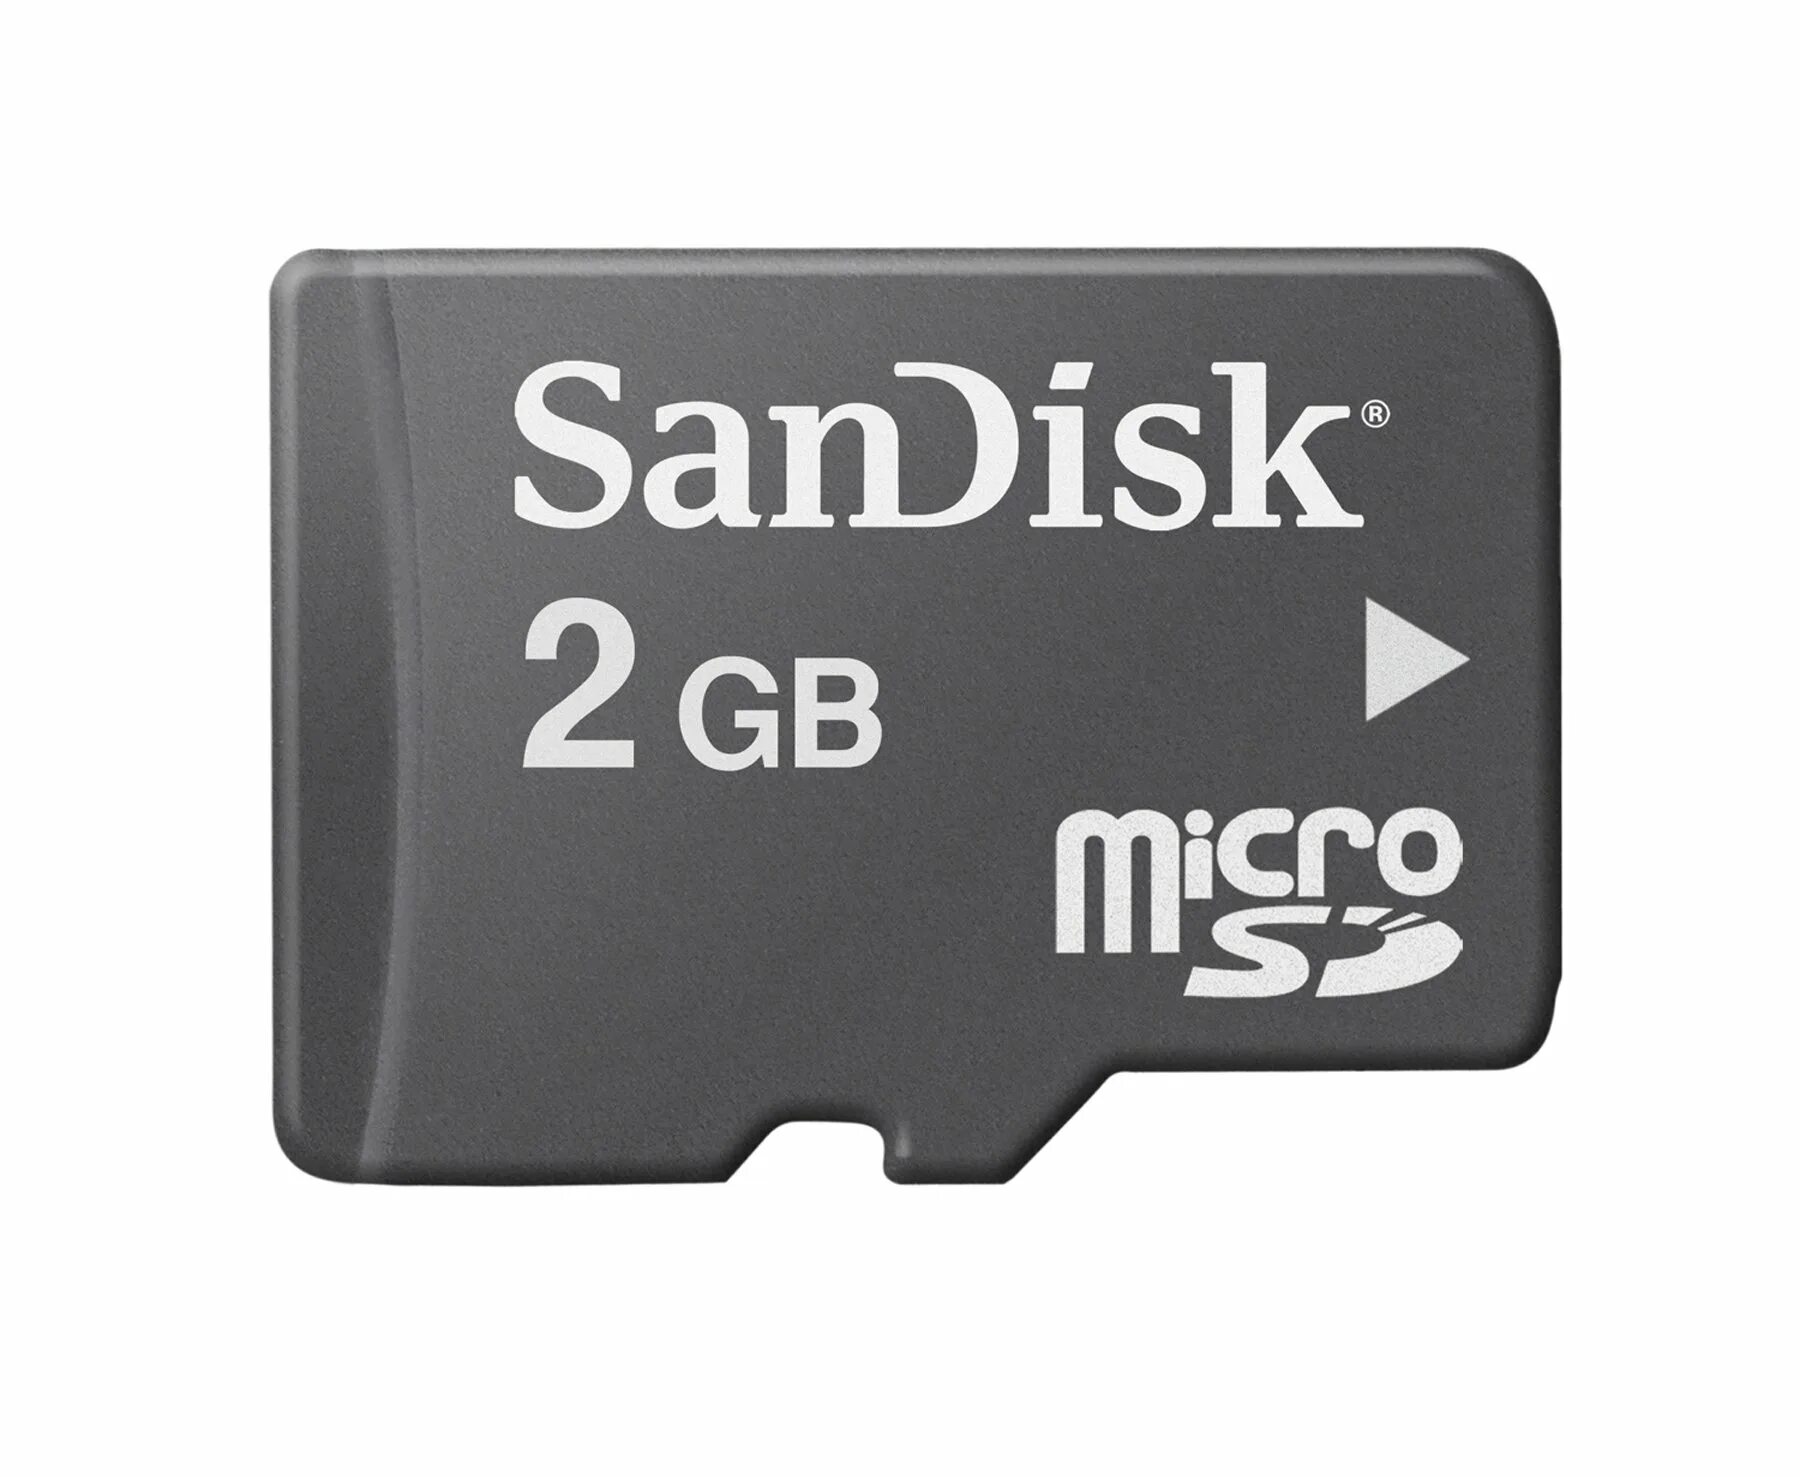 Sandisk купить карту. Карта памяти MICROSDHC 16gb SANDISK (SDSDQM-016g-b35a). MICROSD 2 GB. Карта MICROSD 2 ГБ САНДИСК. SANDISK 32gb.